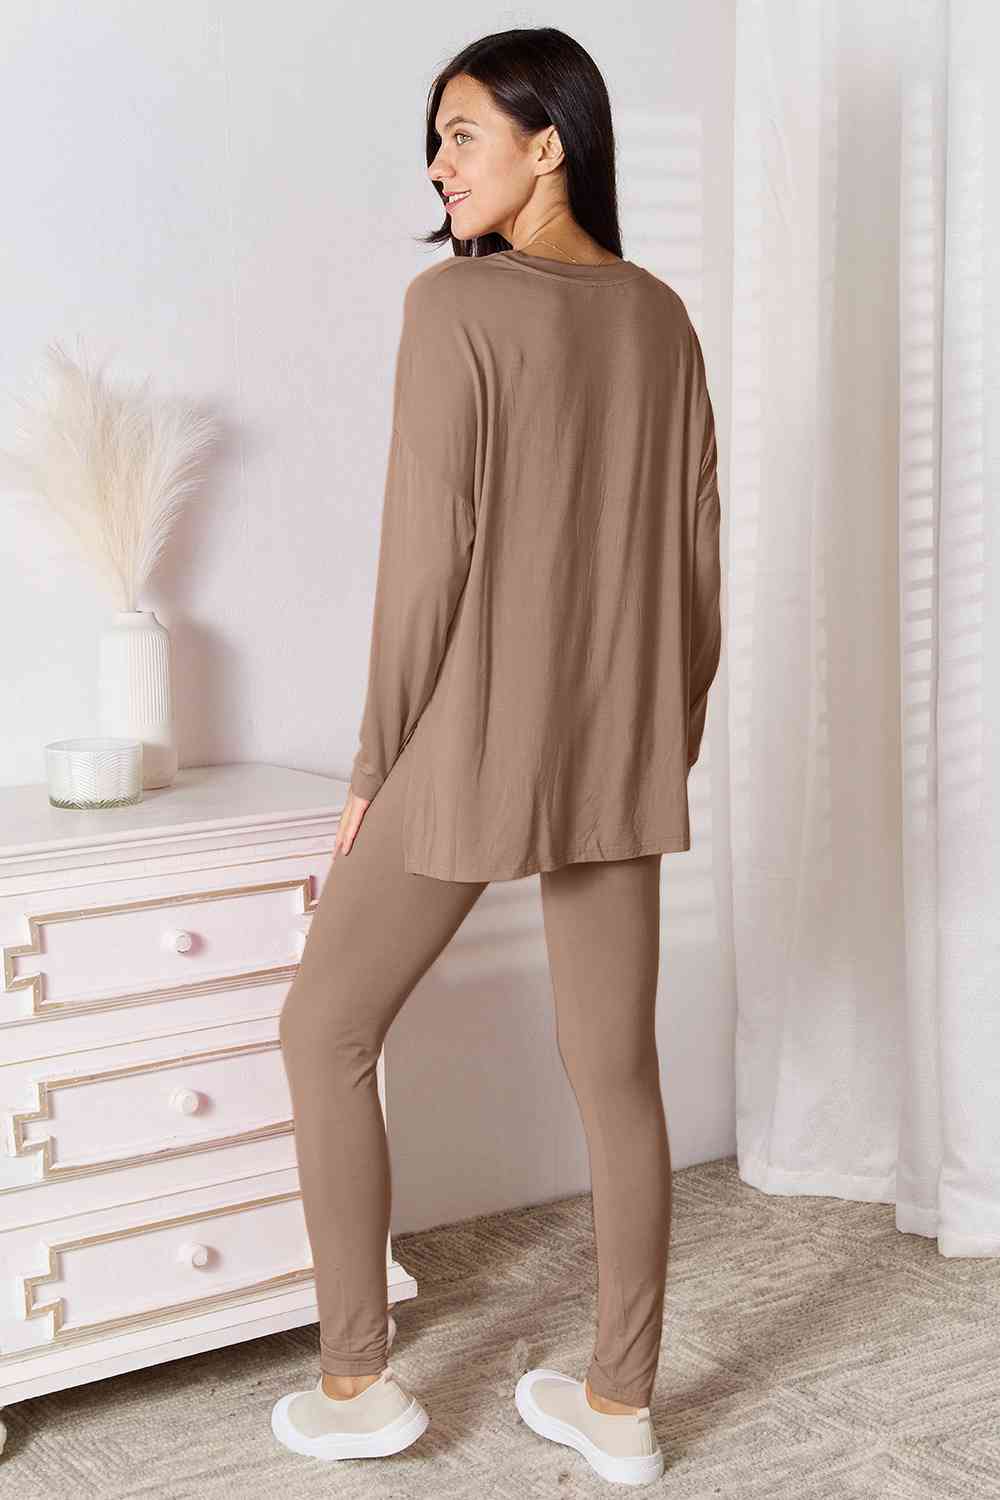 Gray Basic Bae Full Size V-Neck Soft Rayon Long Sleeve Top and Pants Lounge Set Sentient Beauty Fashions Pants